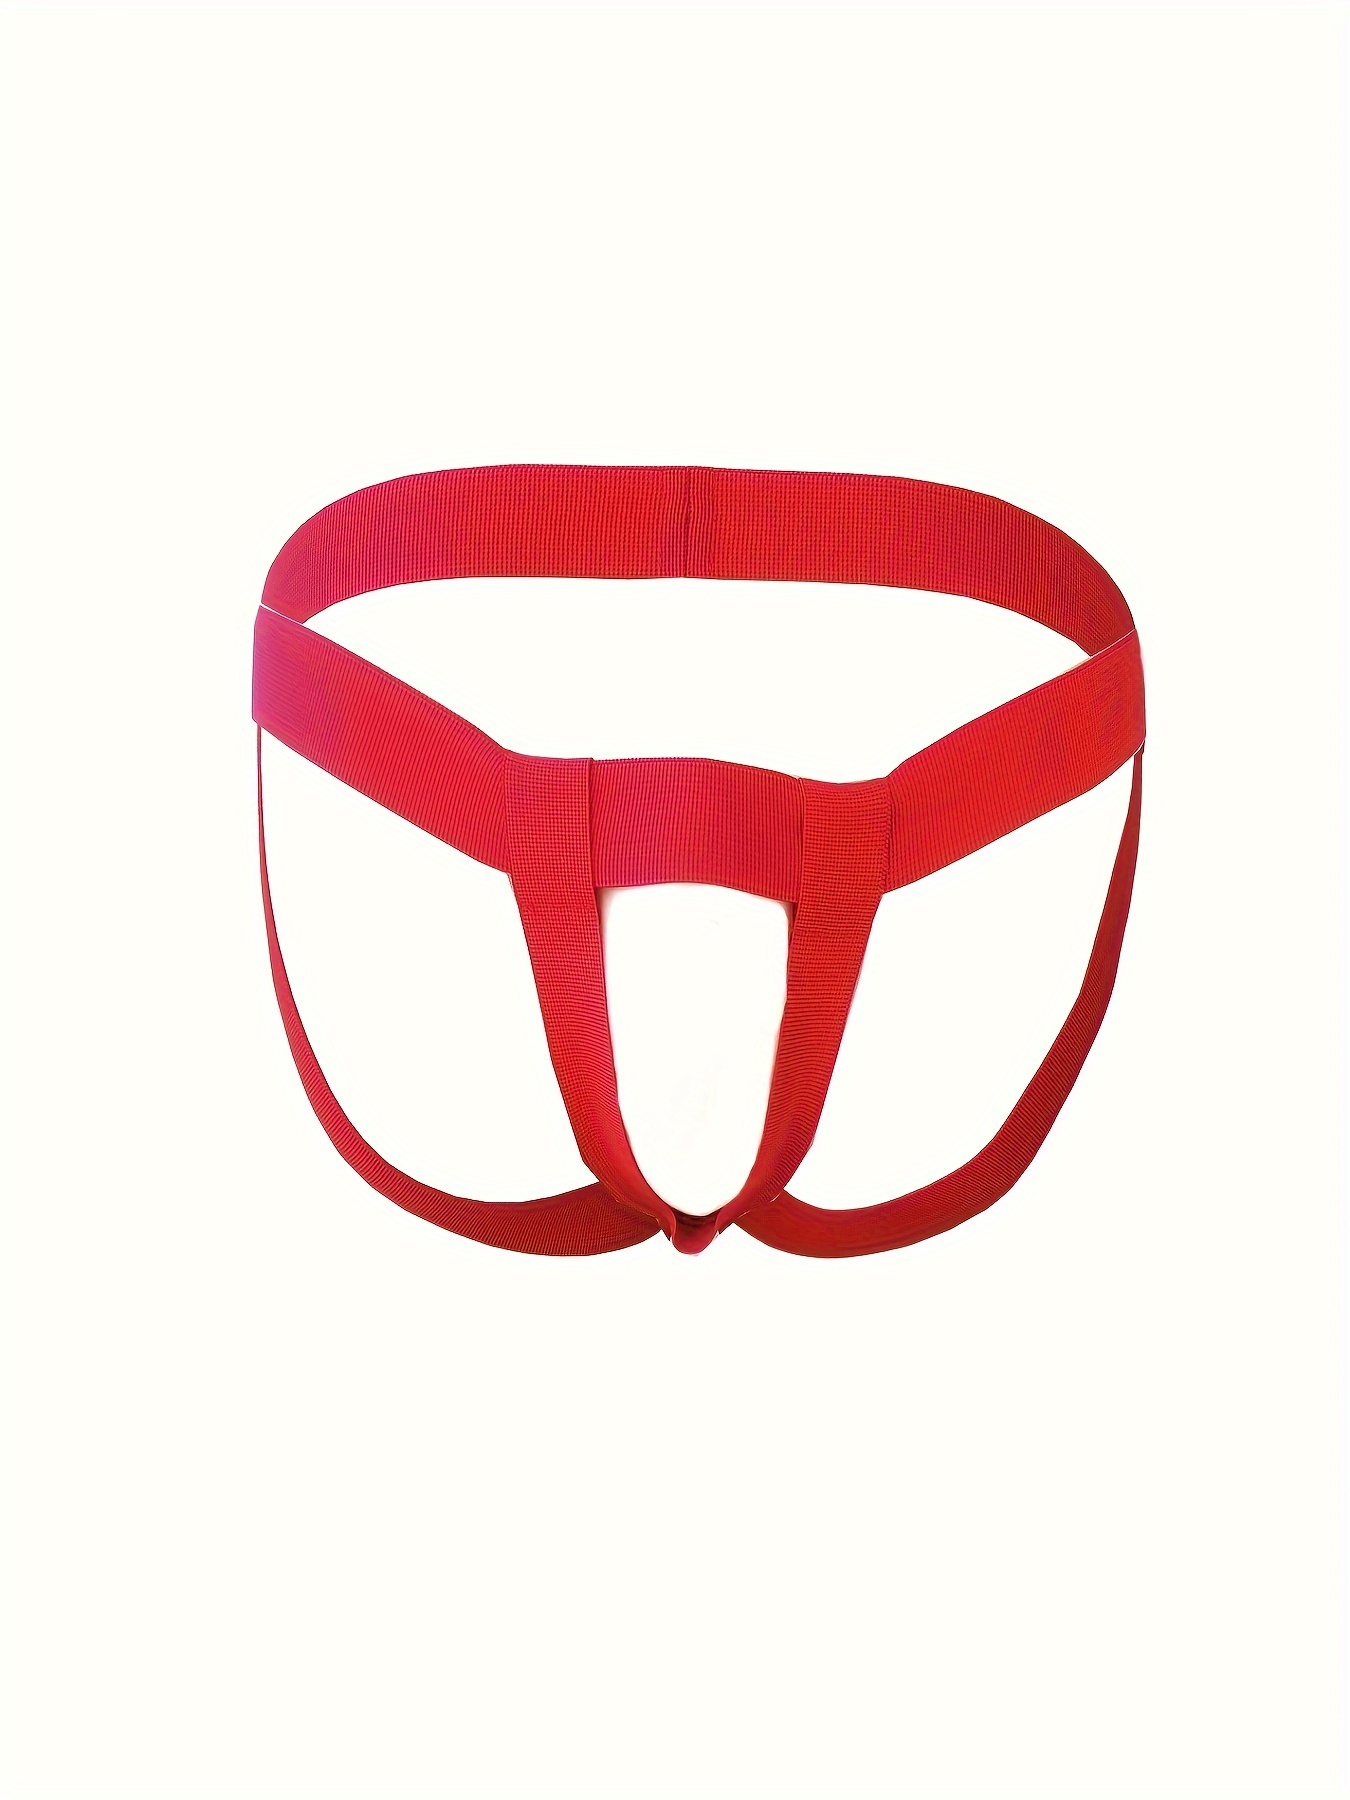 DudeIWantThat.com on X: Crotchless Yoga Pants.    / X